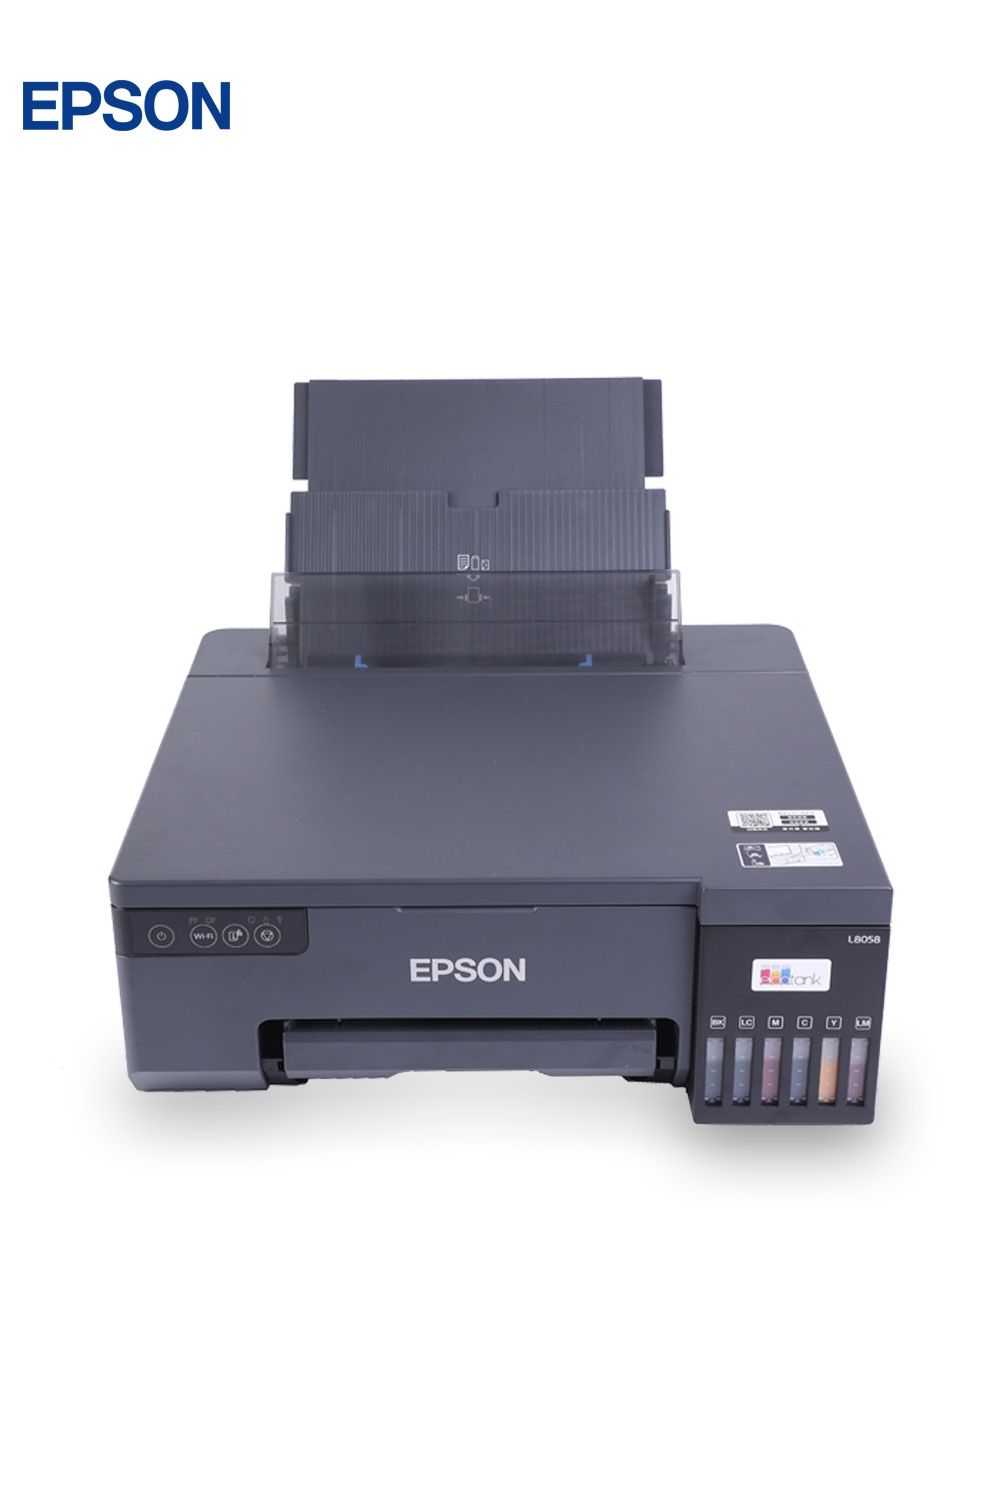 Epson L8058 Heat Transfer Printer (Includes a set of inks) - Black